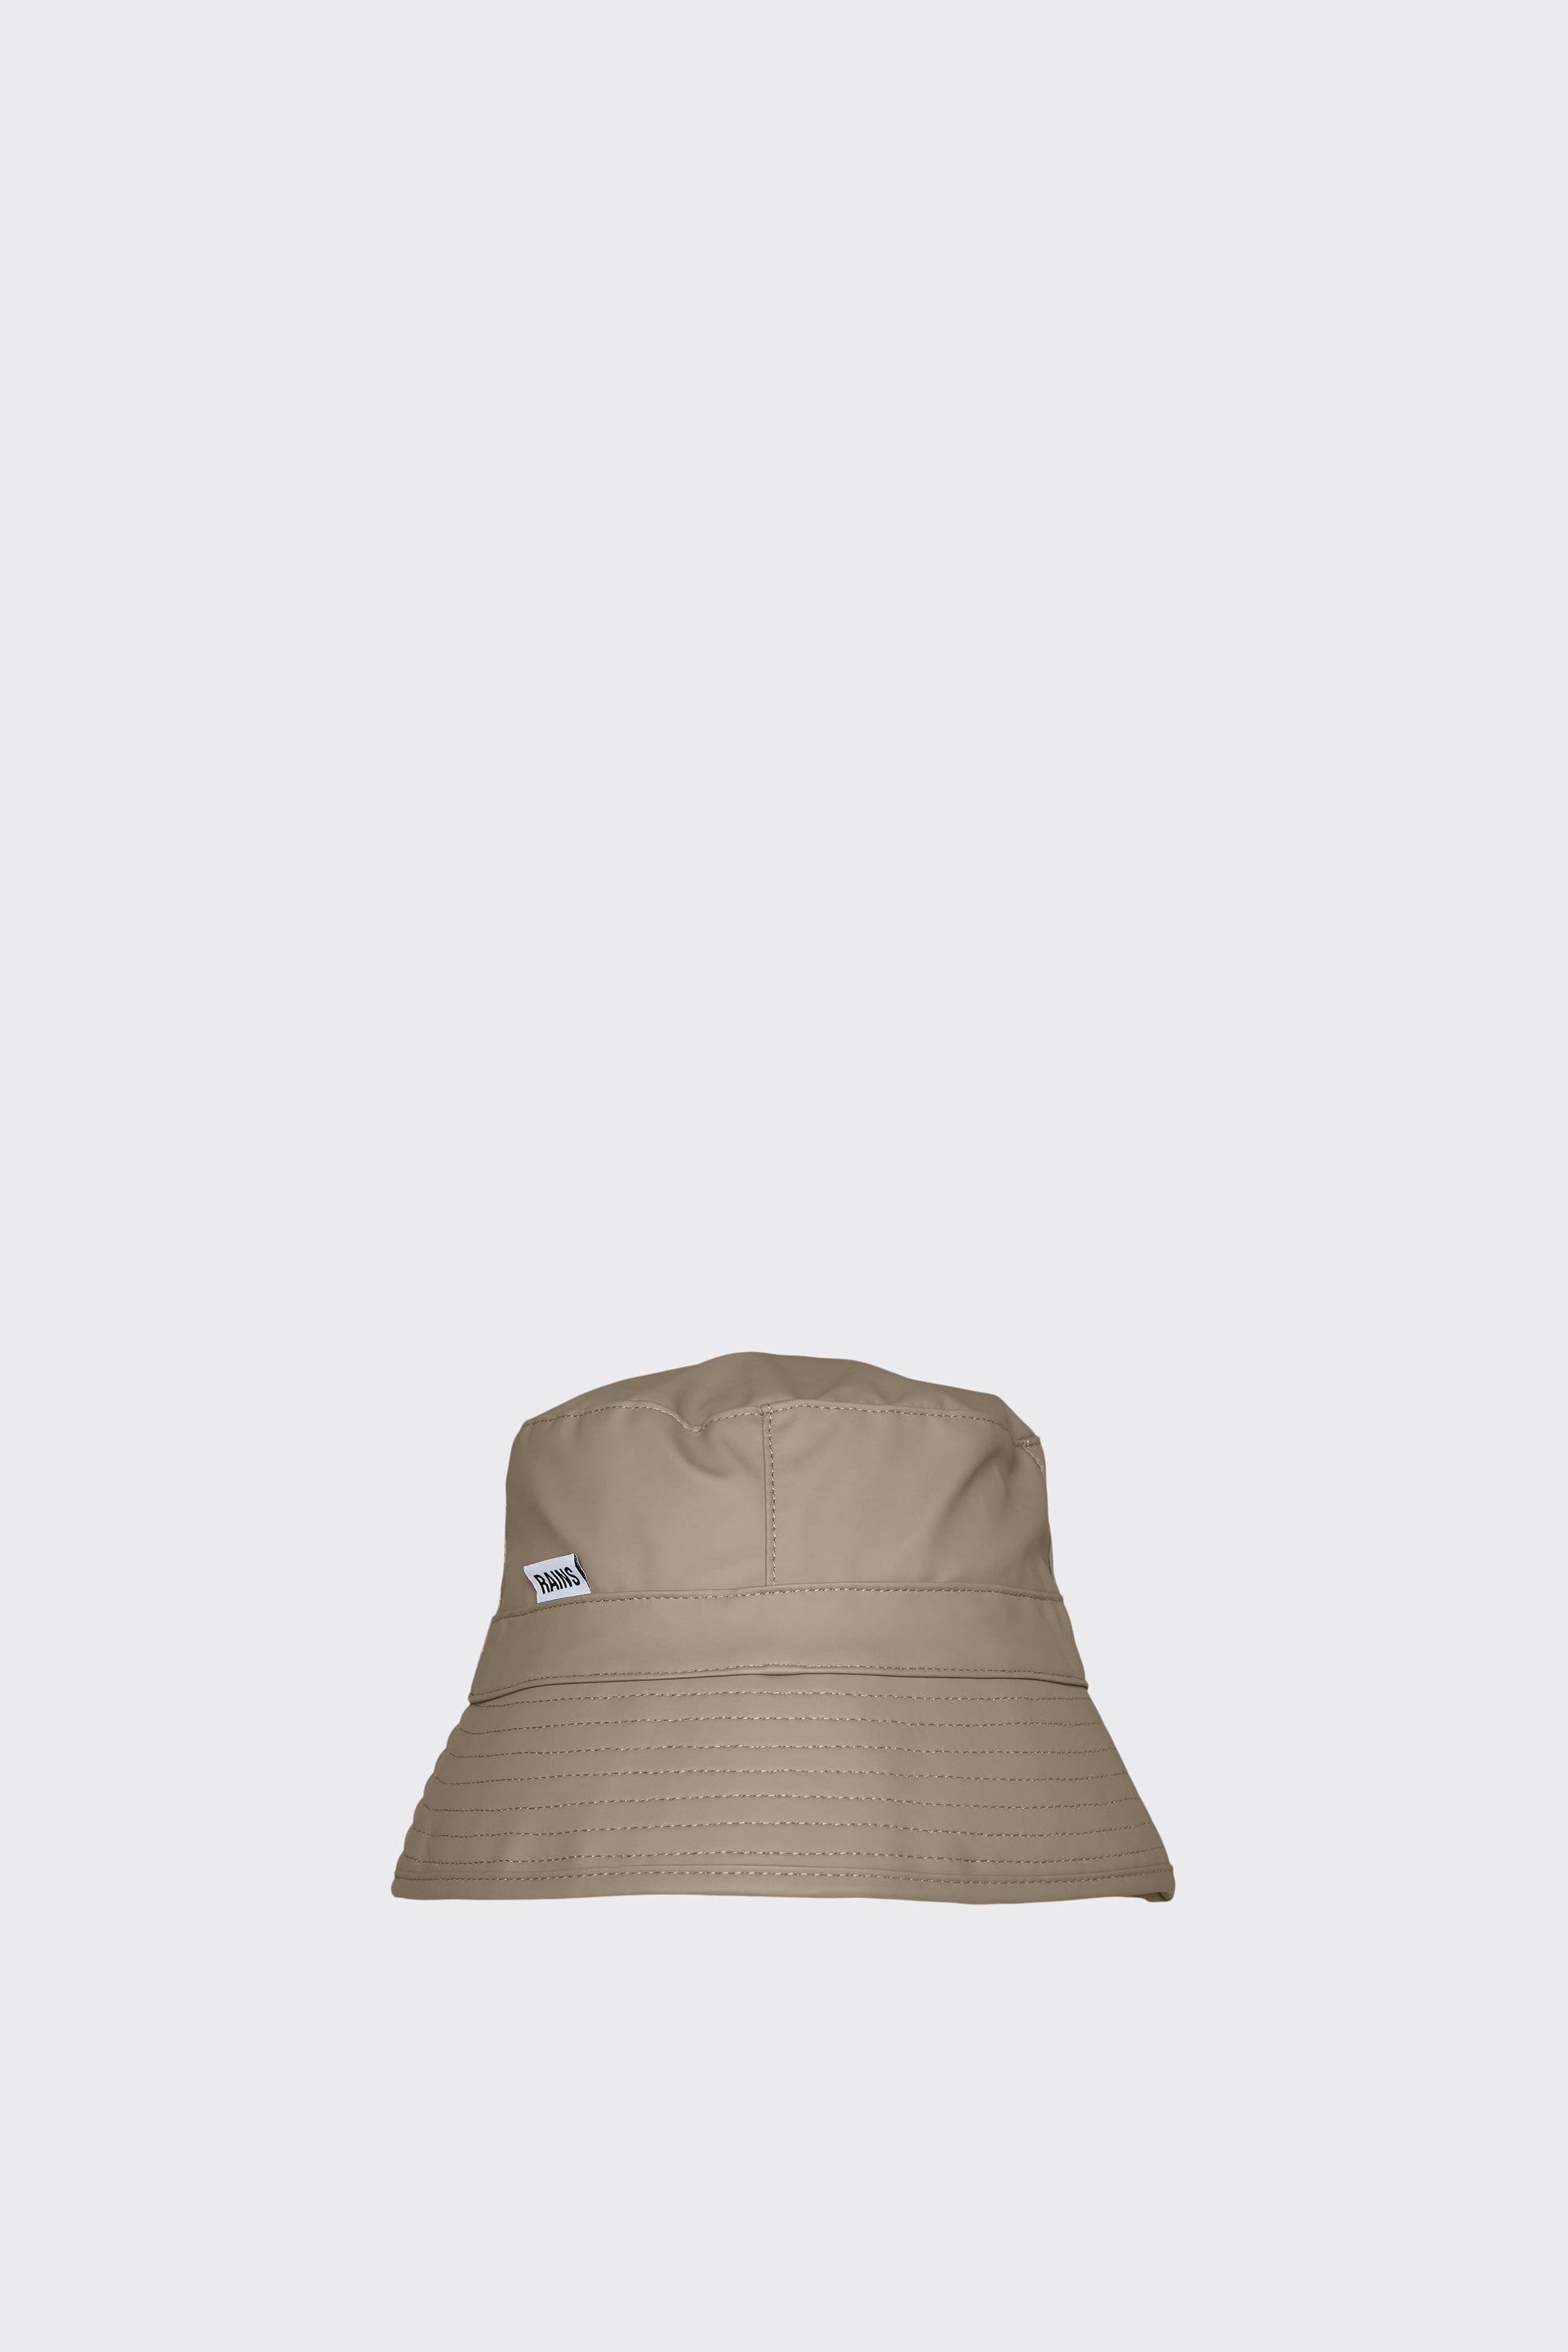 rains-taupe-20010-bucket-hat